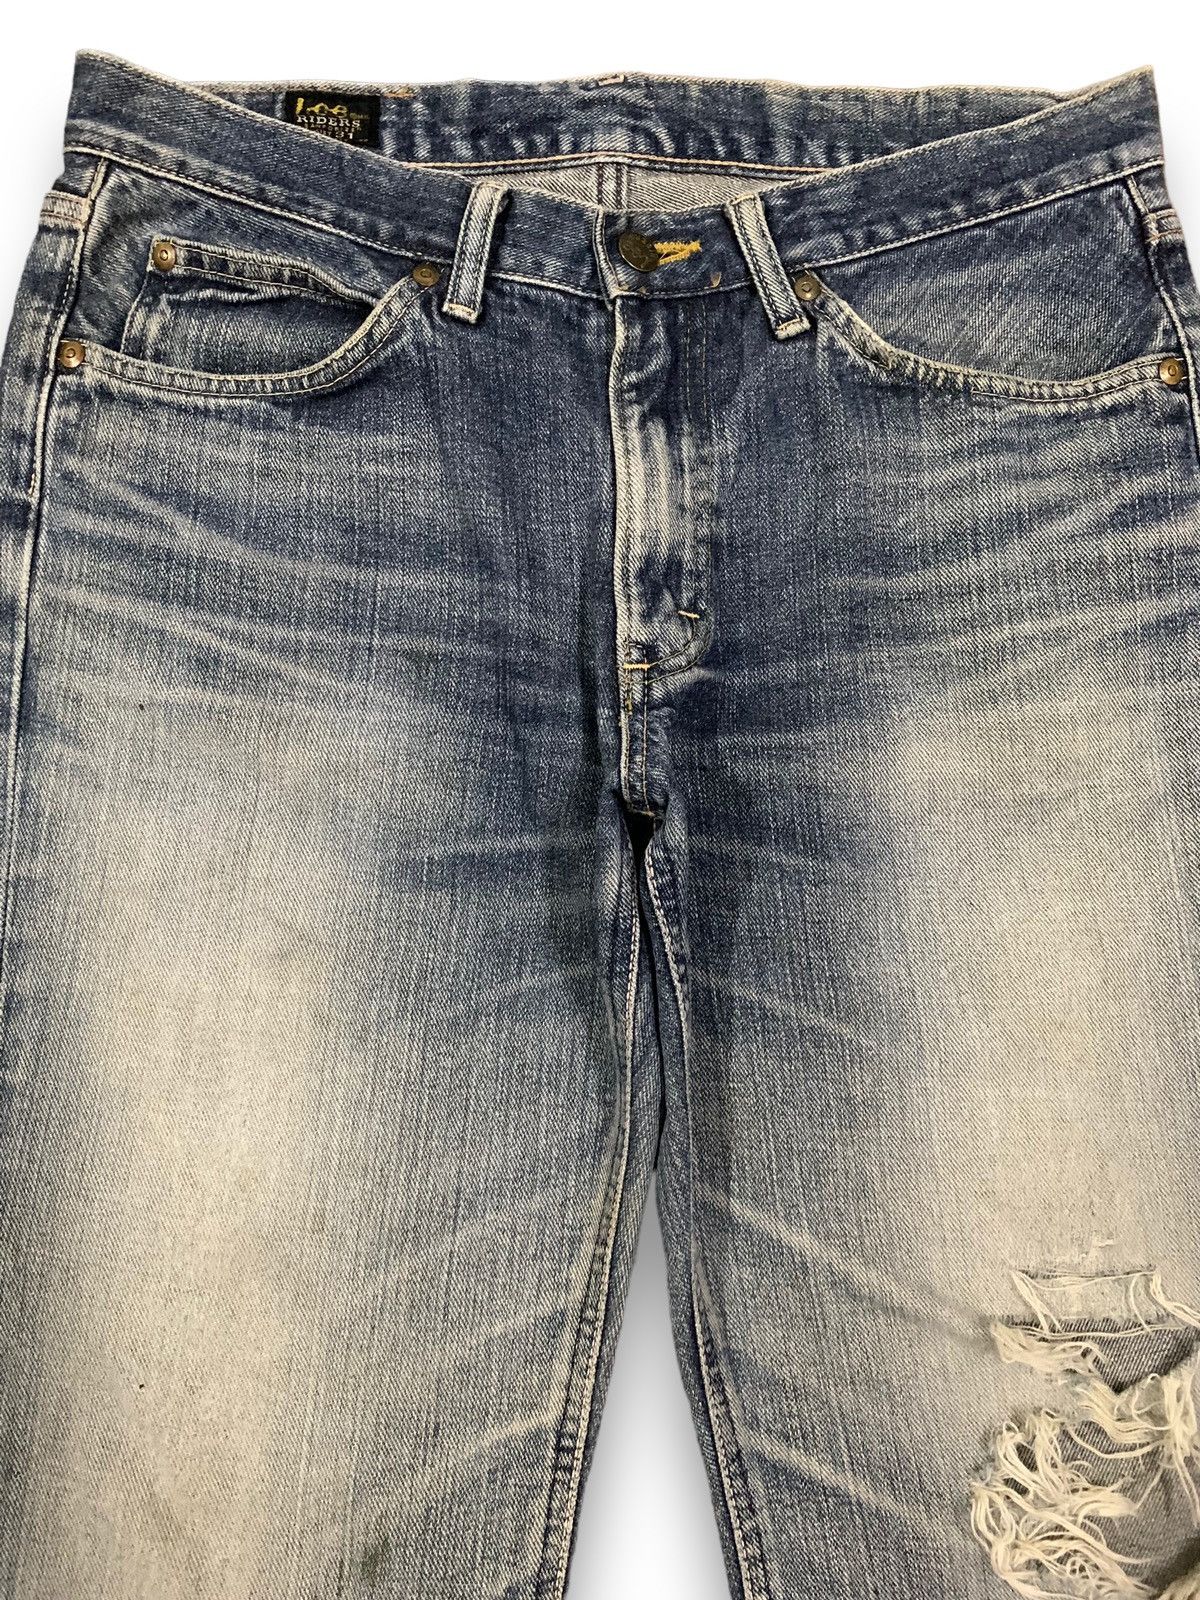 Lee Vintage Lee Cowboy Sanforized Distressed Flared Jeans Size US 31 - 3 Thumbnail